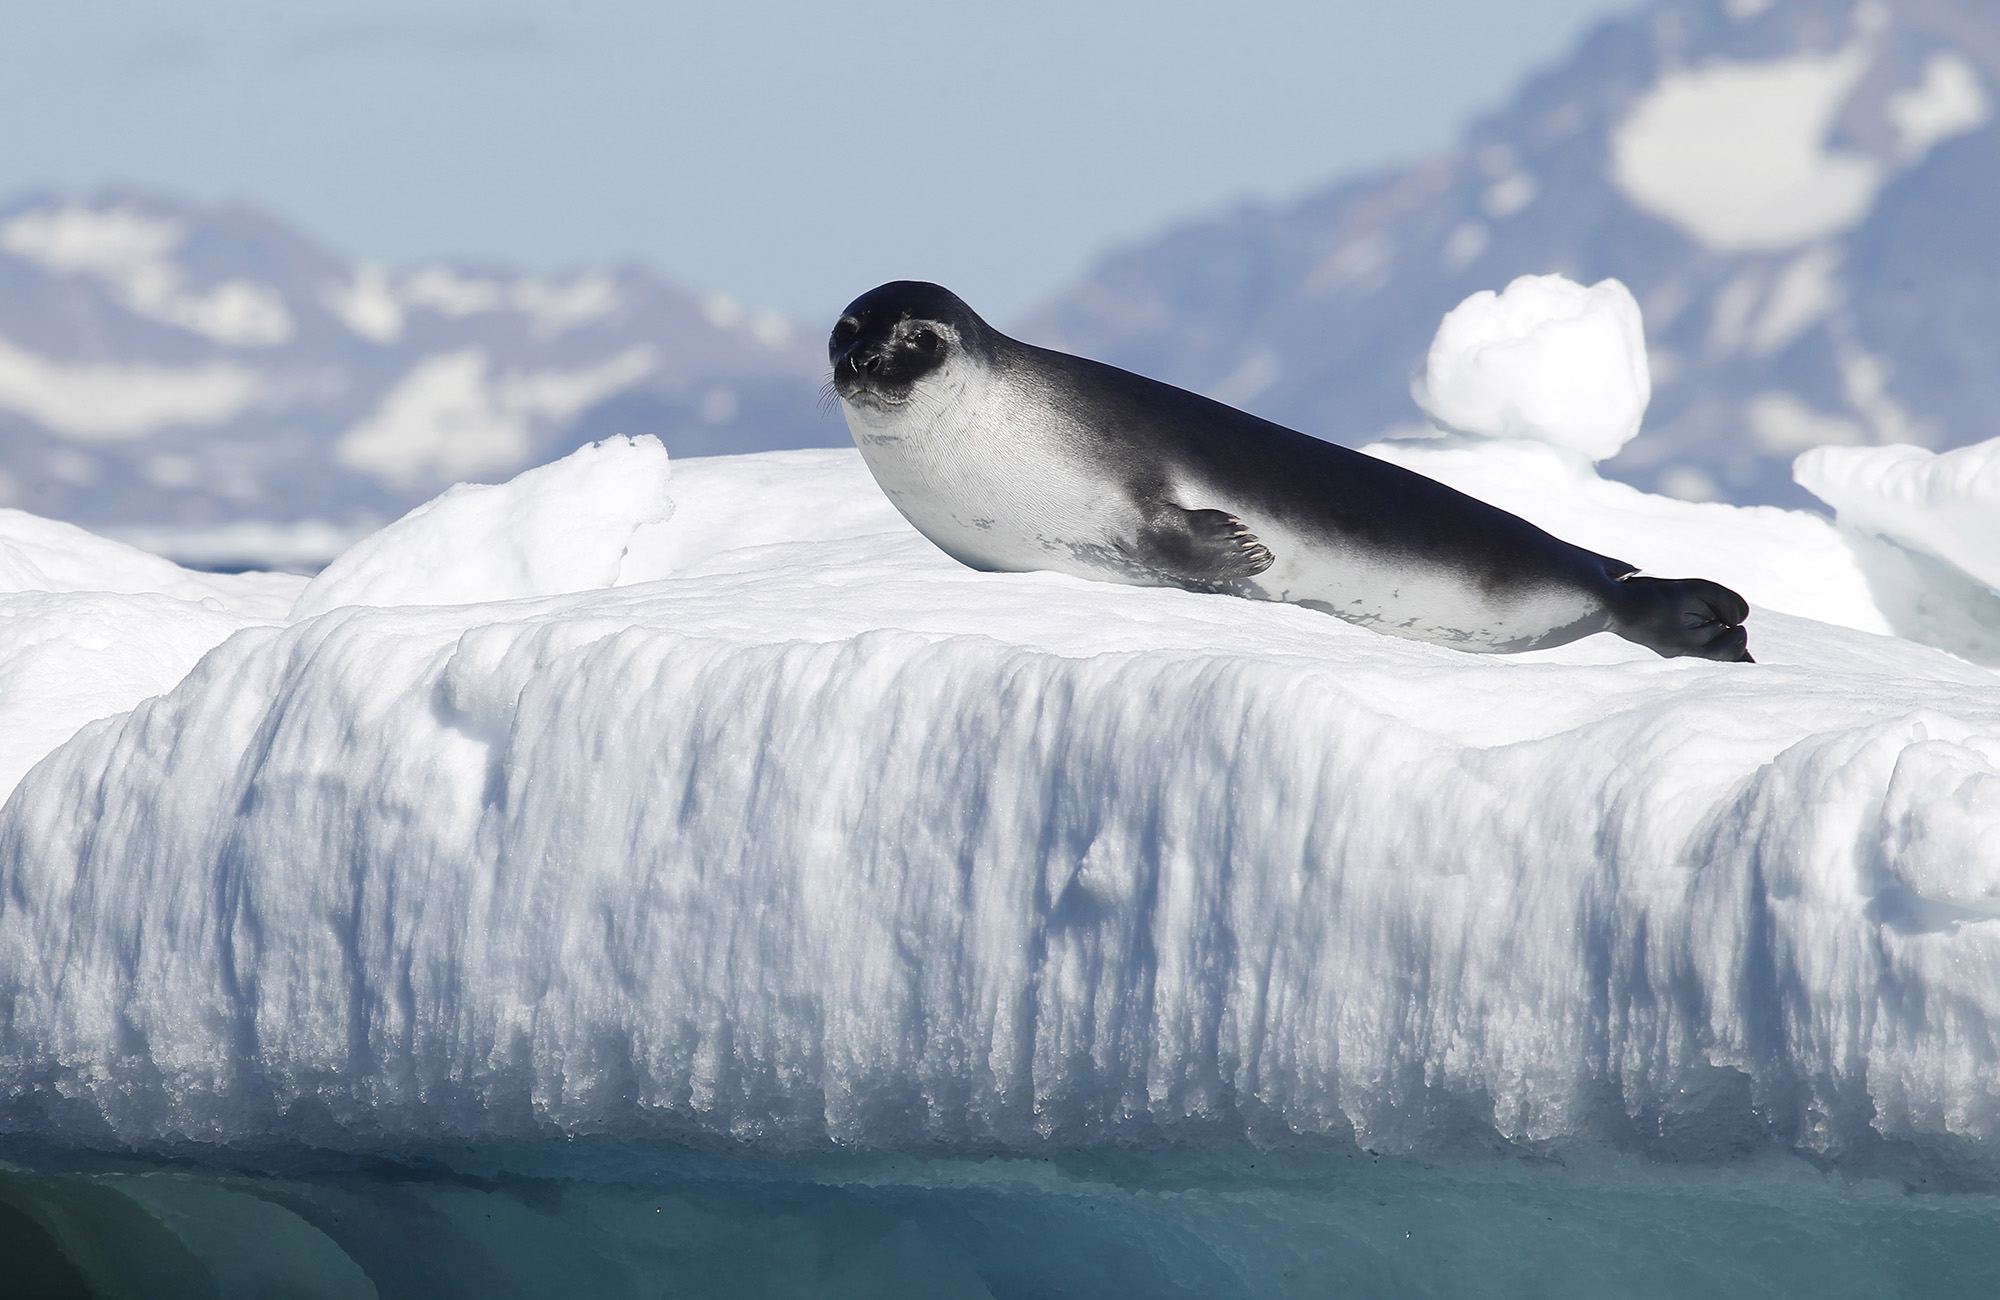 Zeehond op ijsberg | Reis naar het onbekende met KILROY